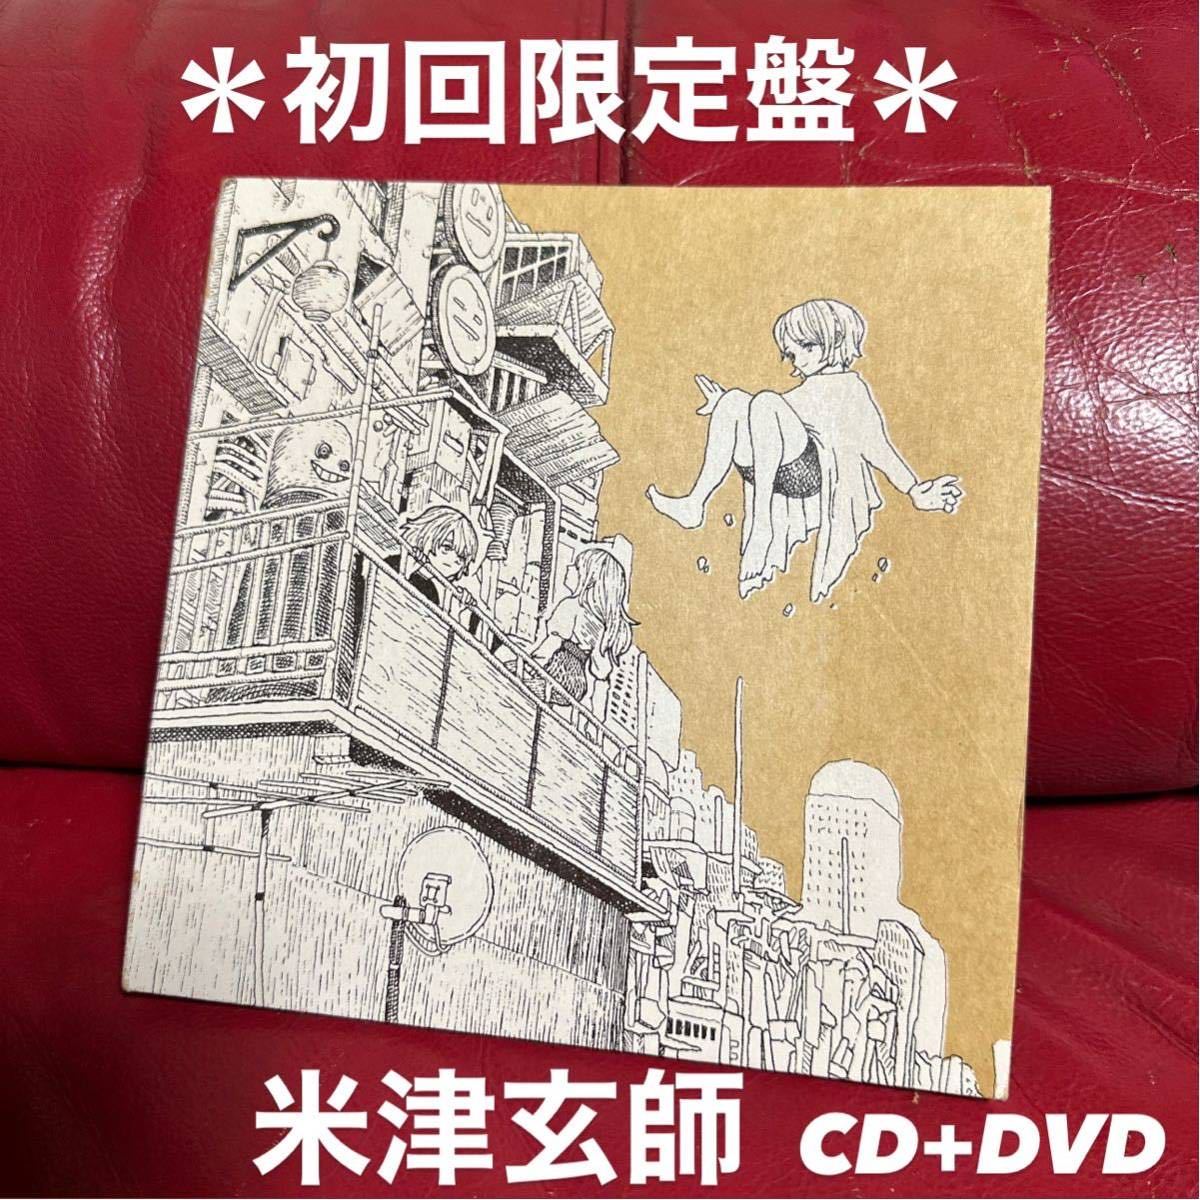 LOSER/ナンバーナイン 米津玄師 完全生産限定盤 DVD CD_画像1